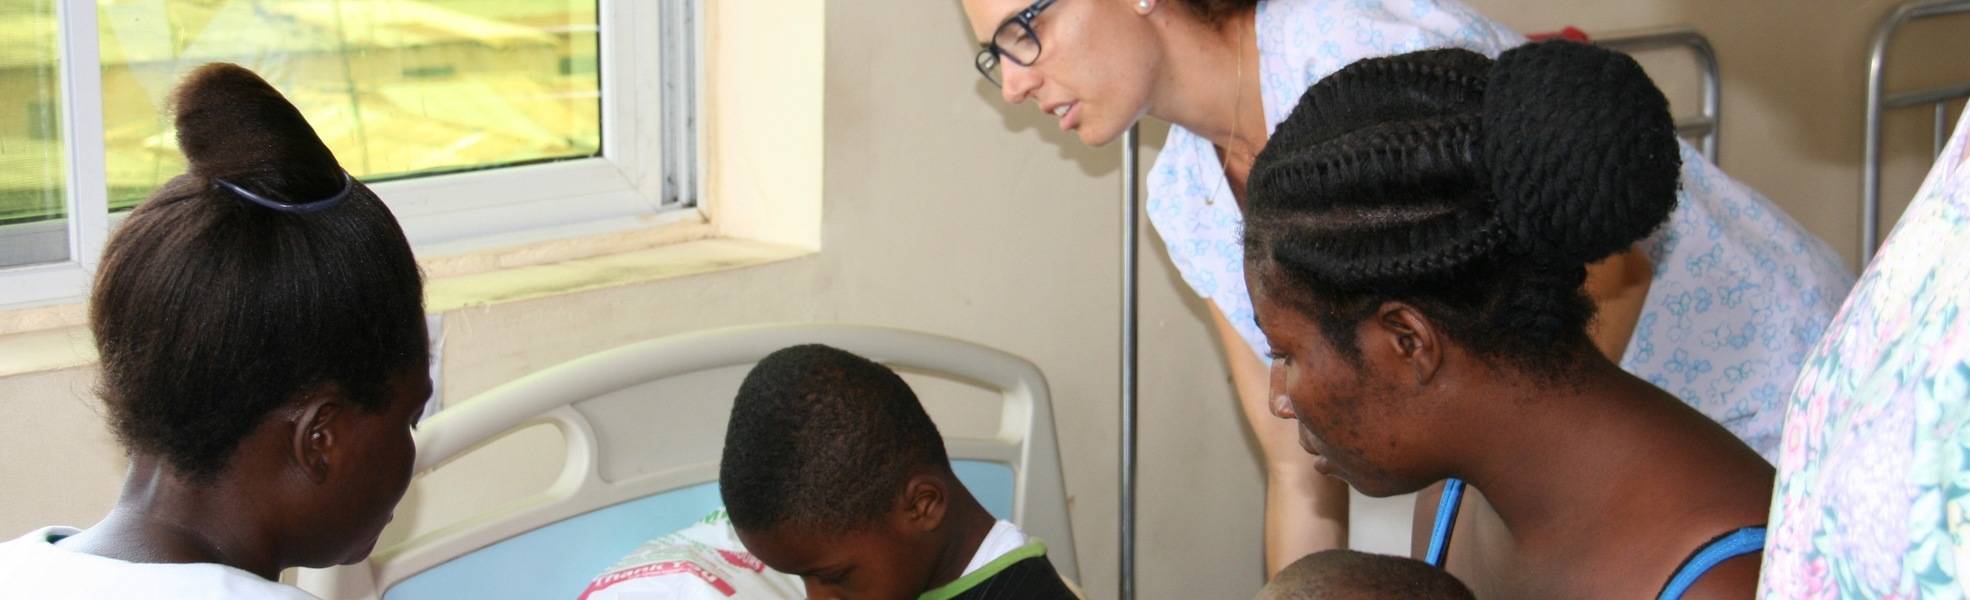 Medical internship in Ghana - gain practical experience at a hospital